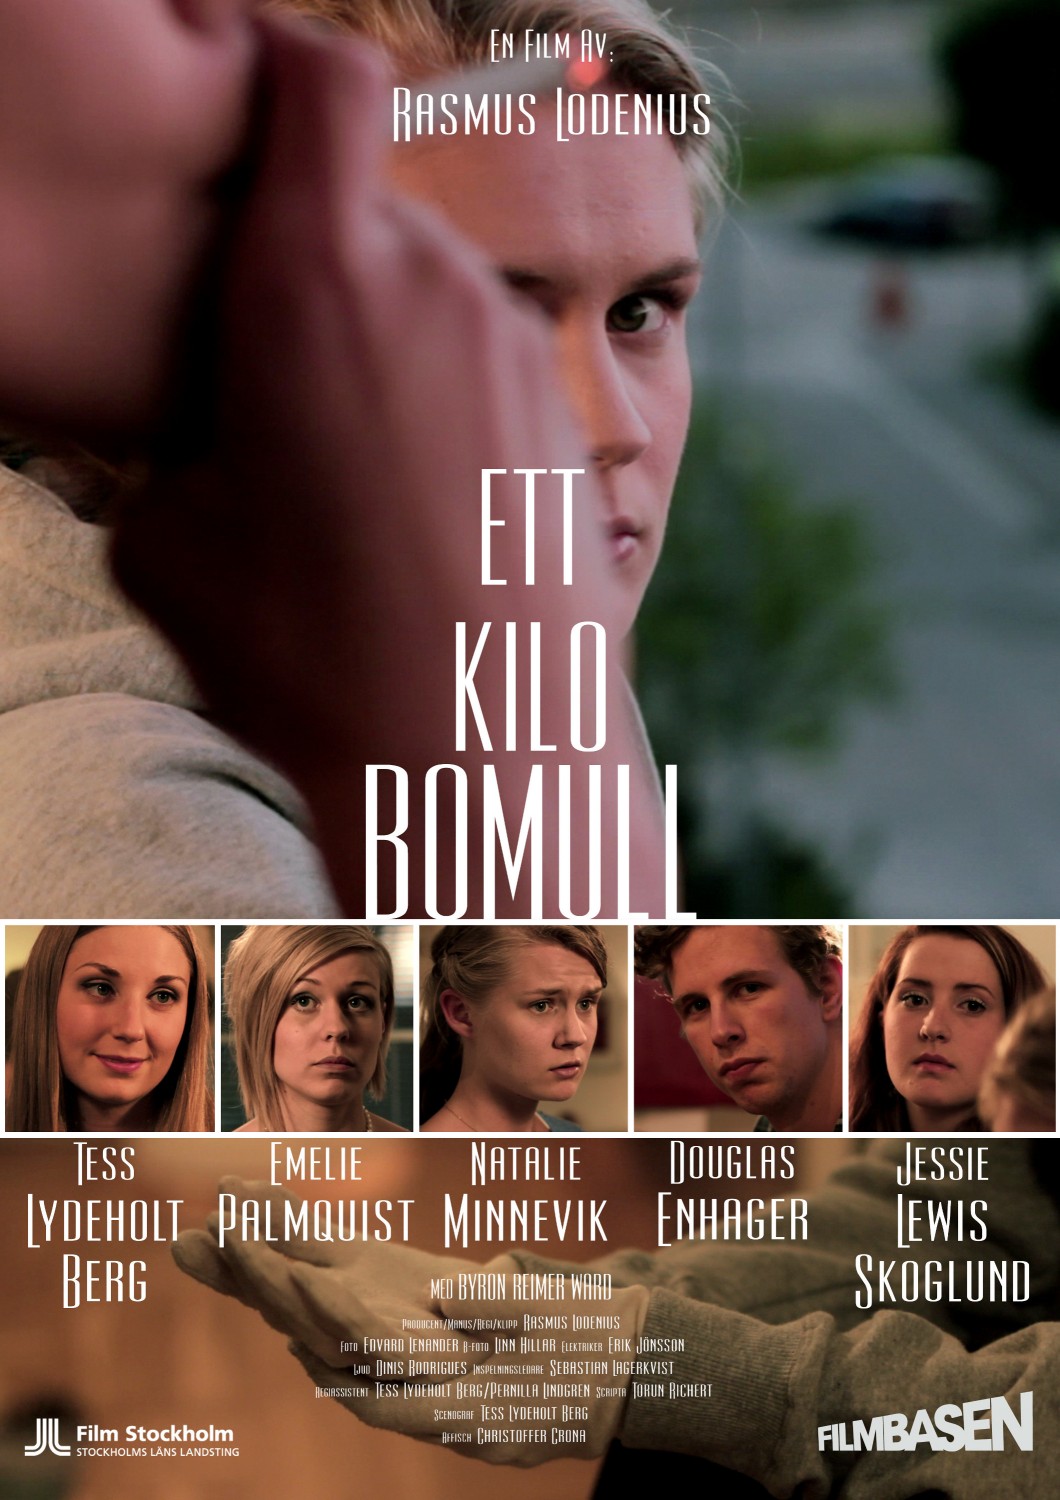 Extra Large Movie Poster Image for Ett kilo bomull